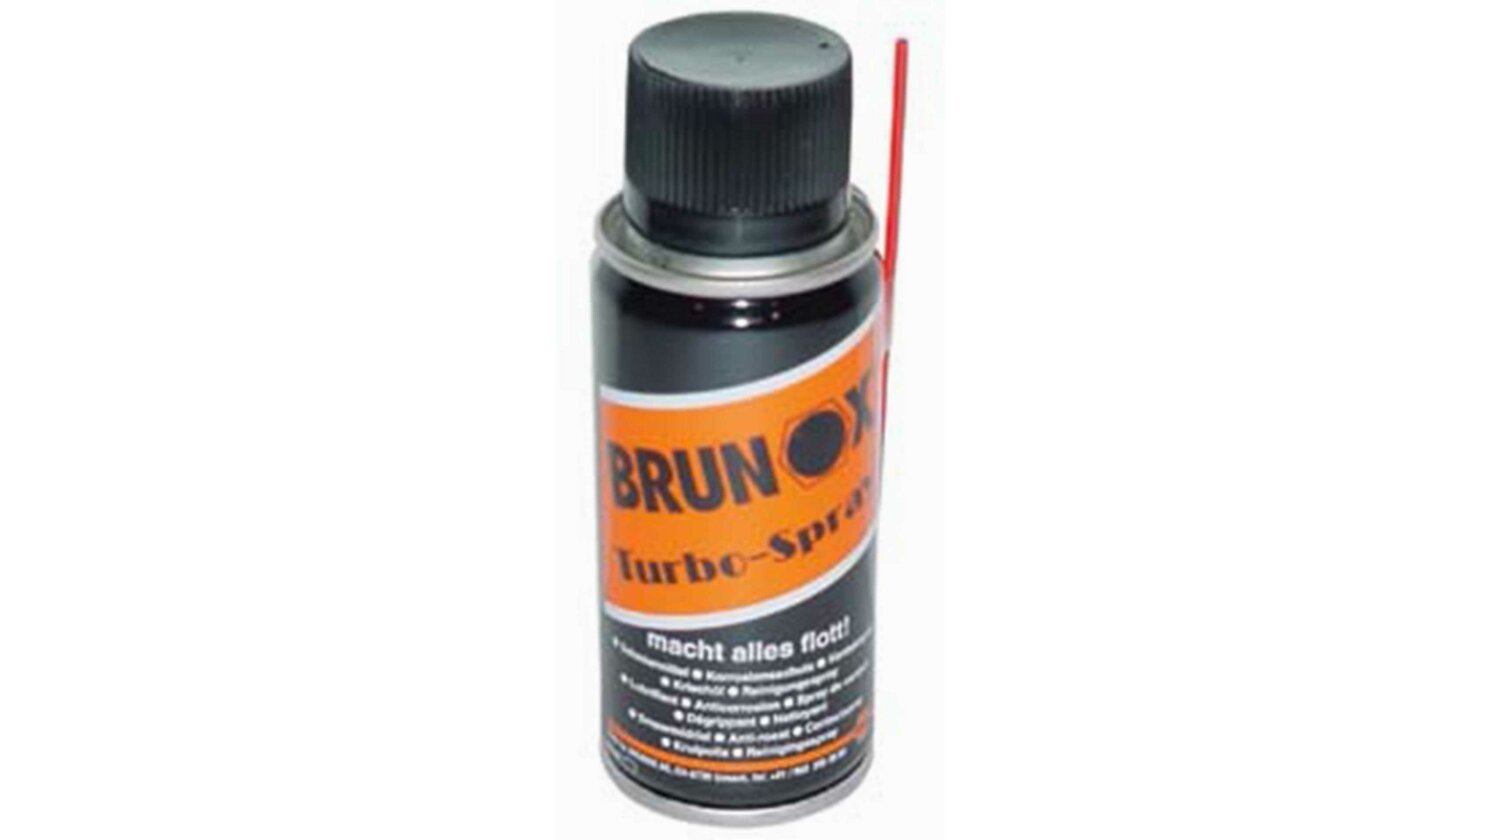 Brunox Turbo-Spray 100 ml